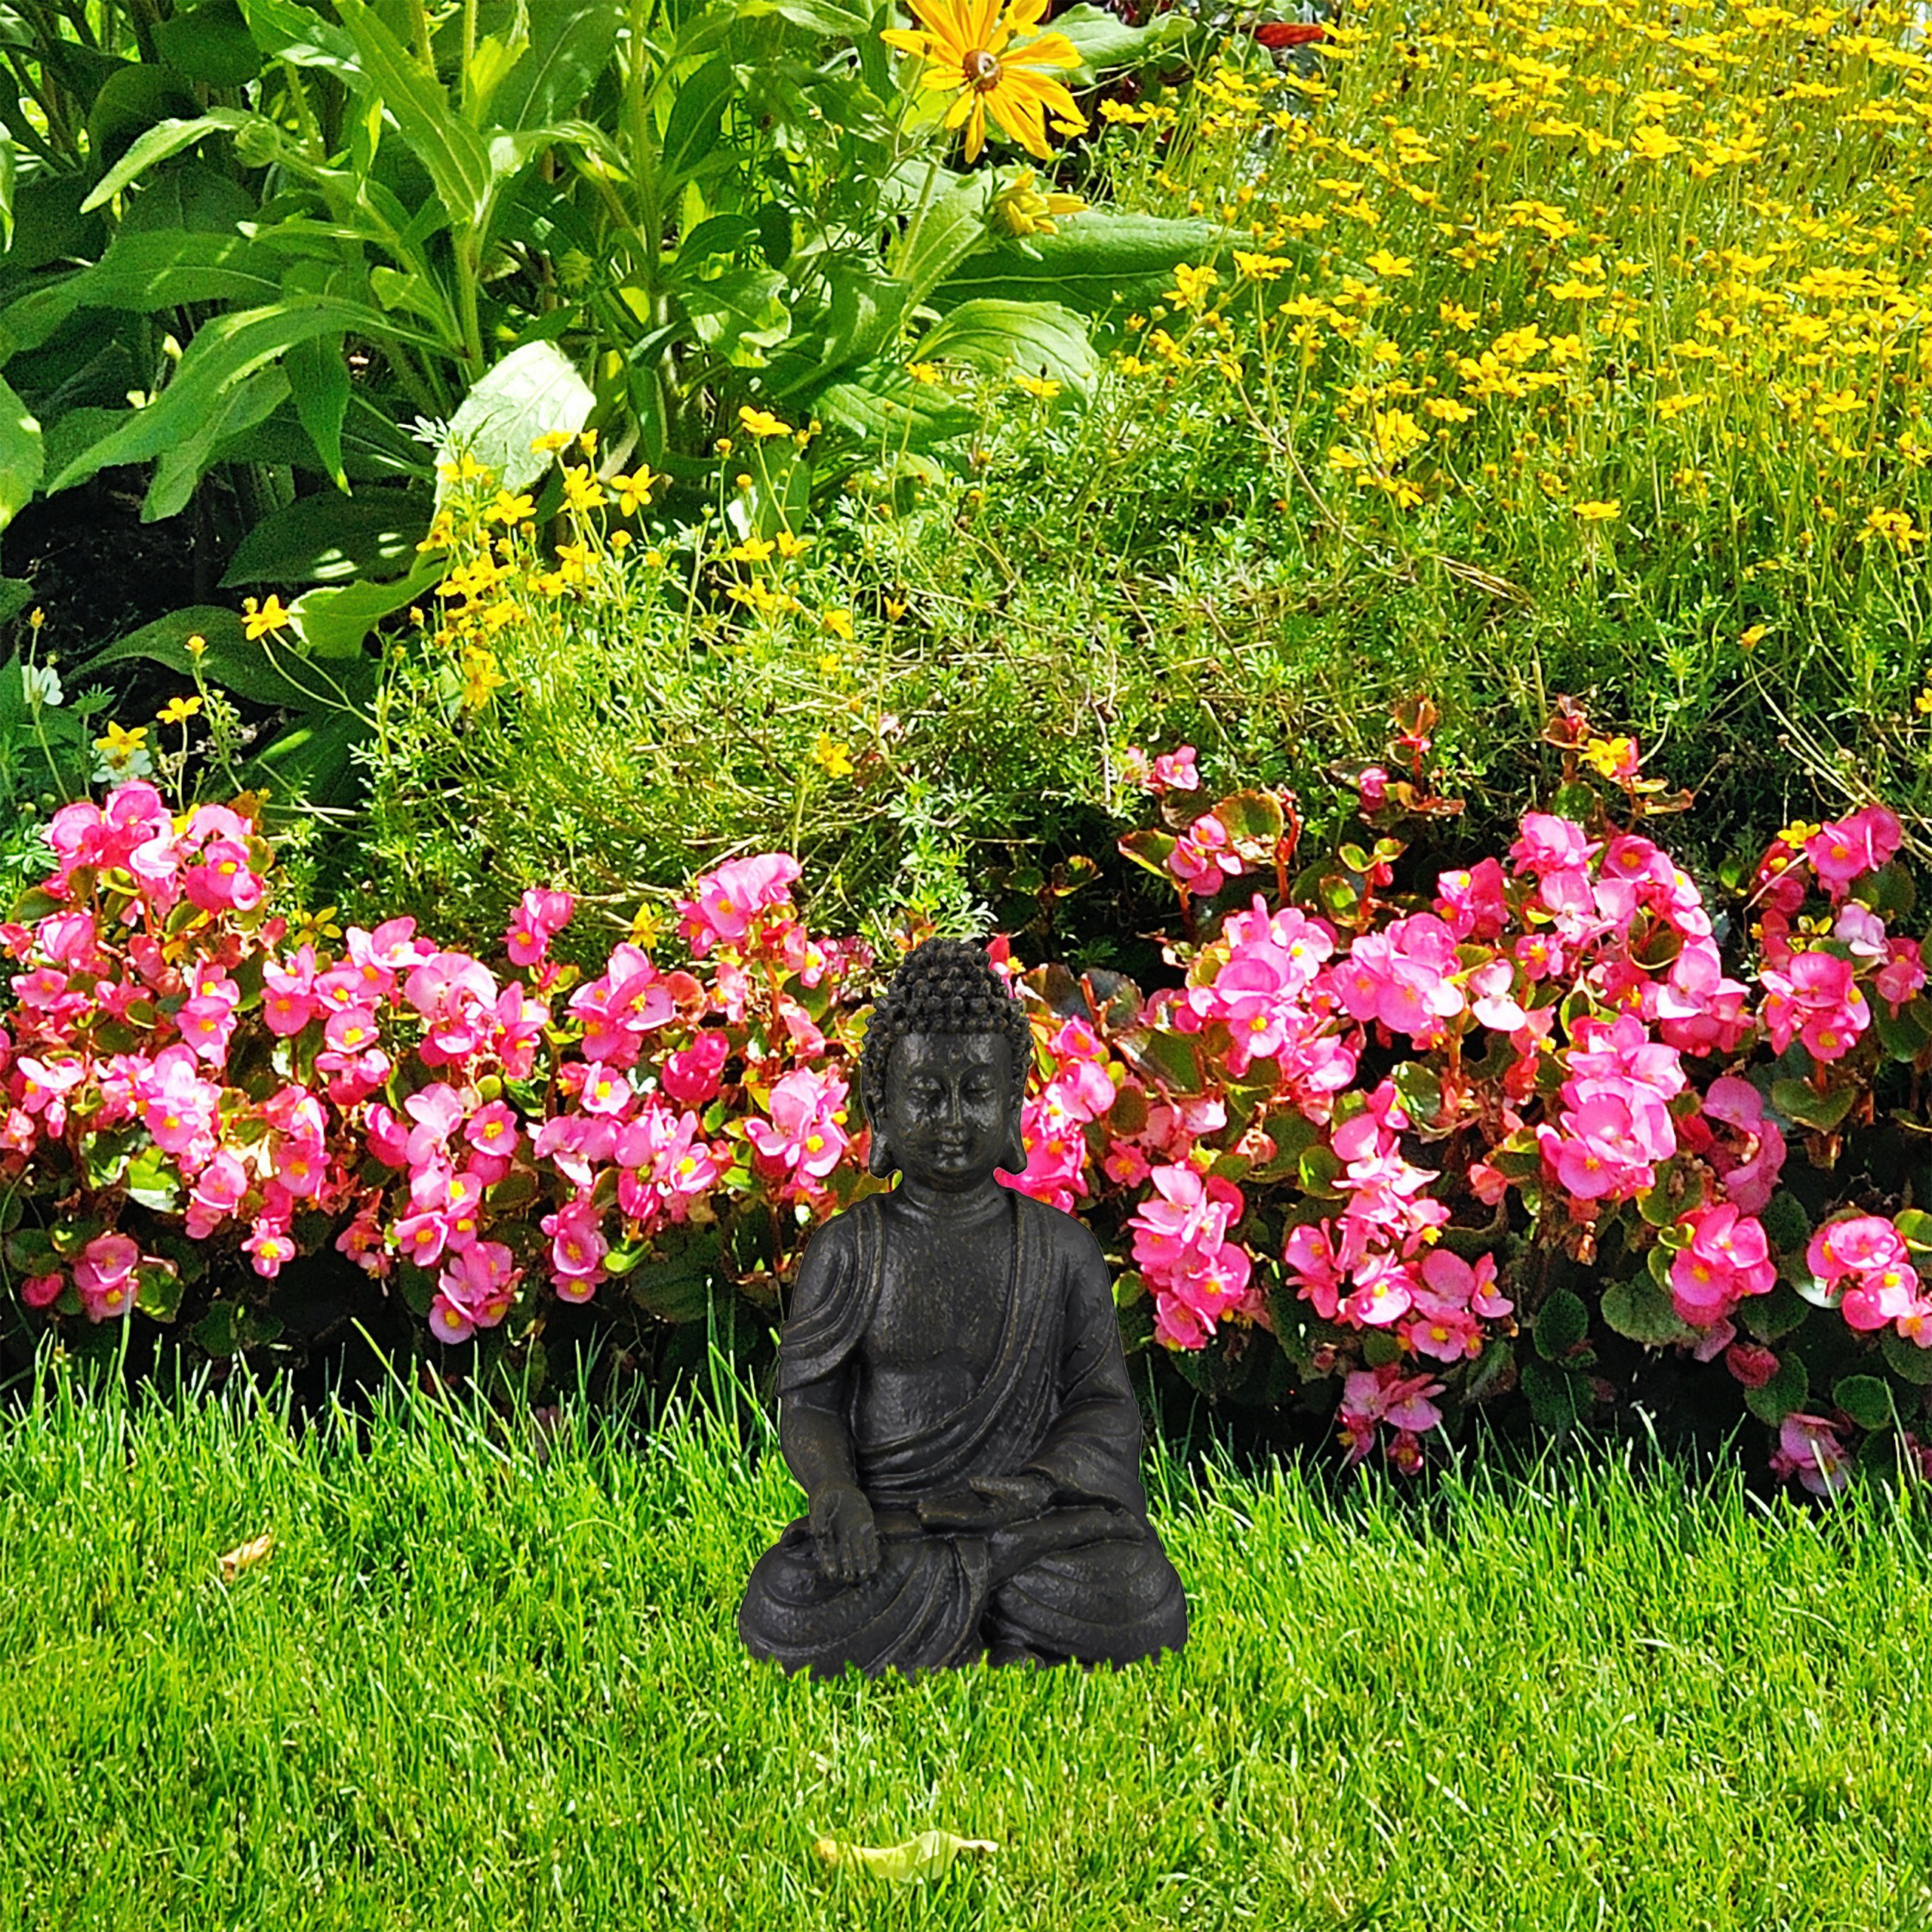 cm, Dunkelgrau relaxdays Buddhafigur Buddha 30 Figur Anthrazit sitzend